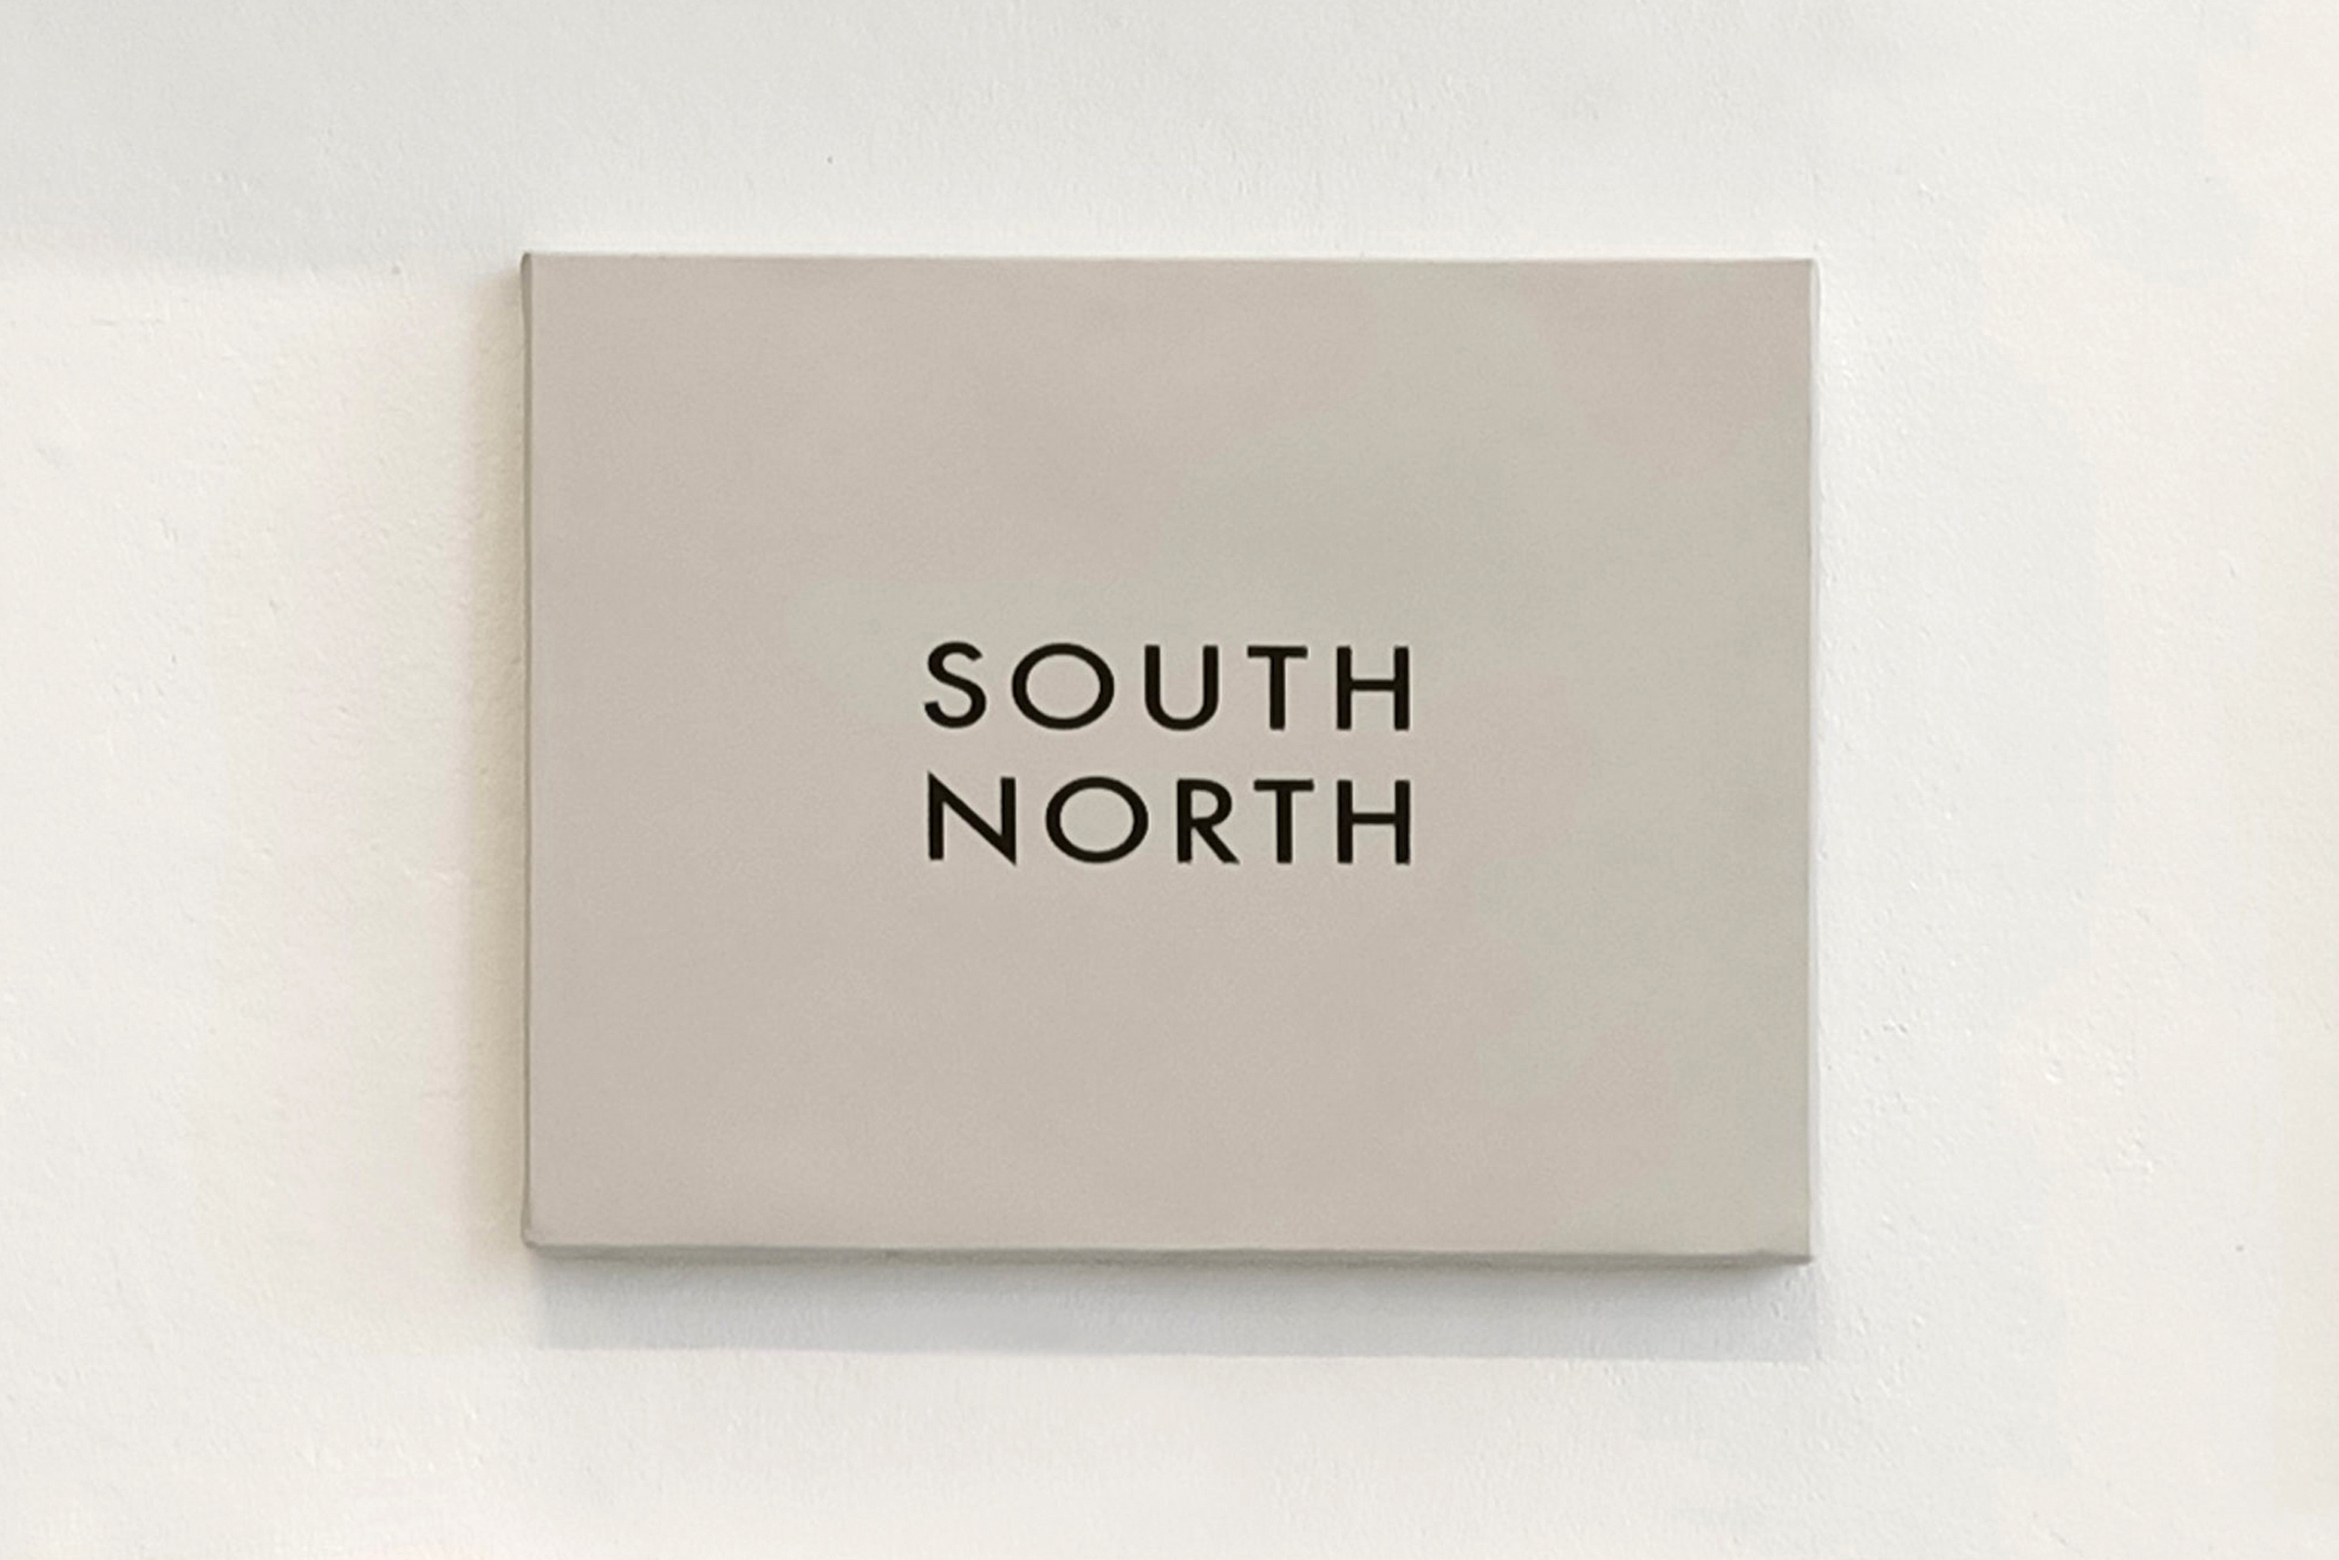 South North